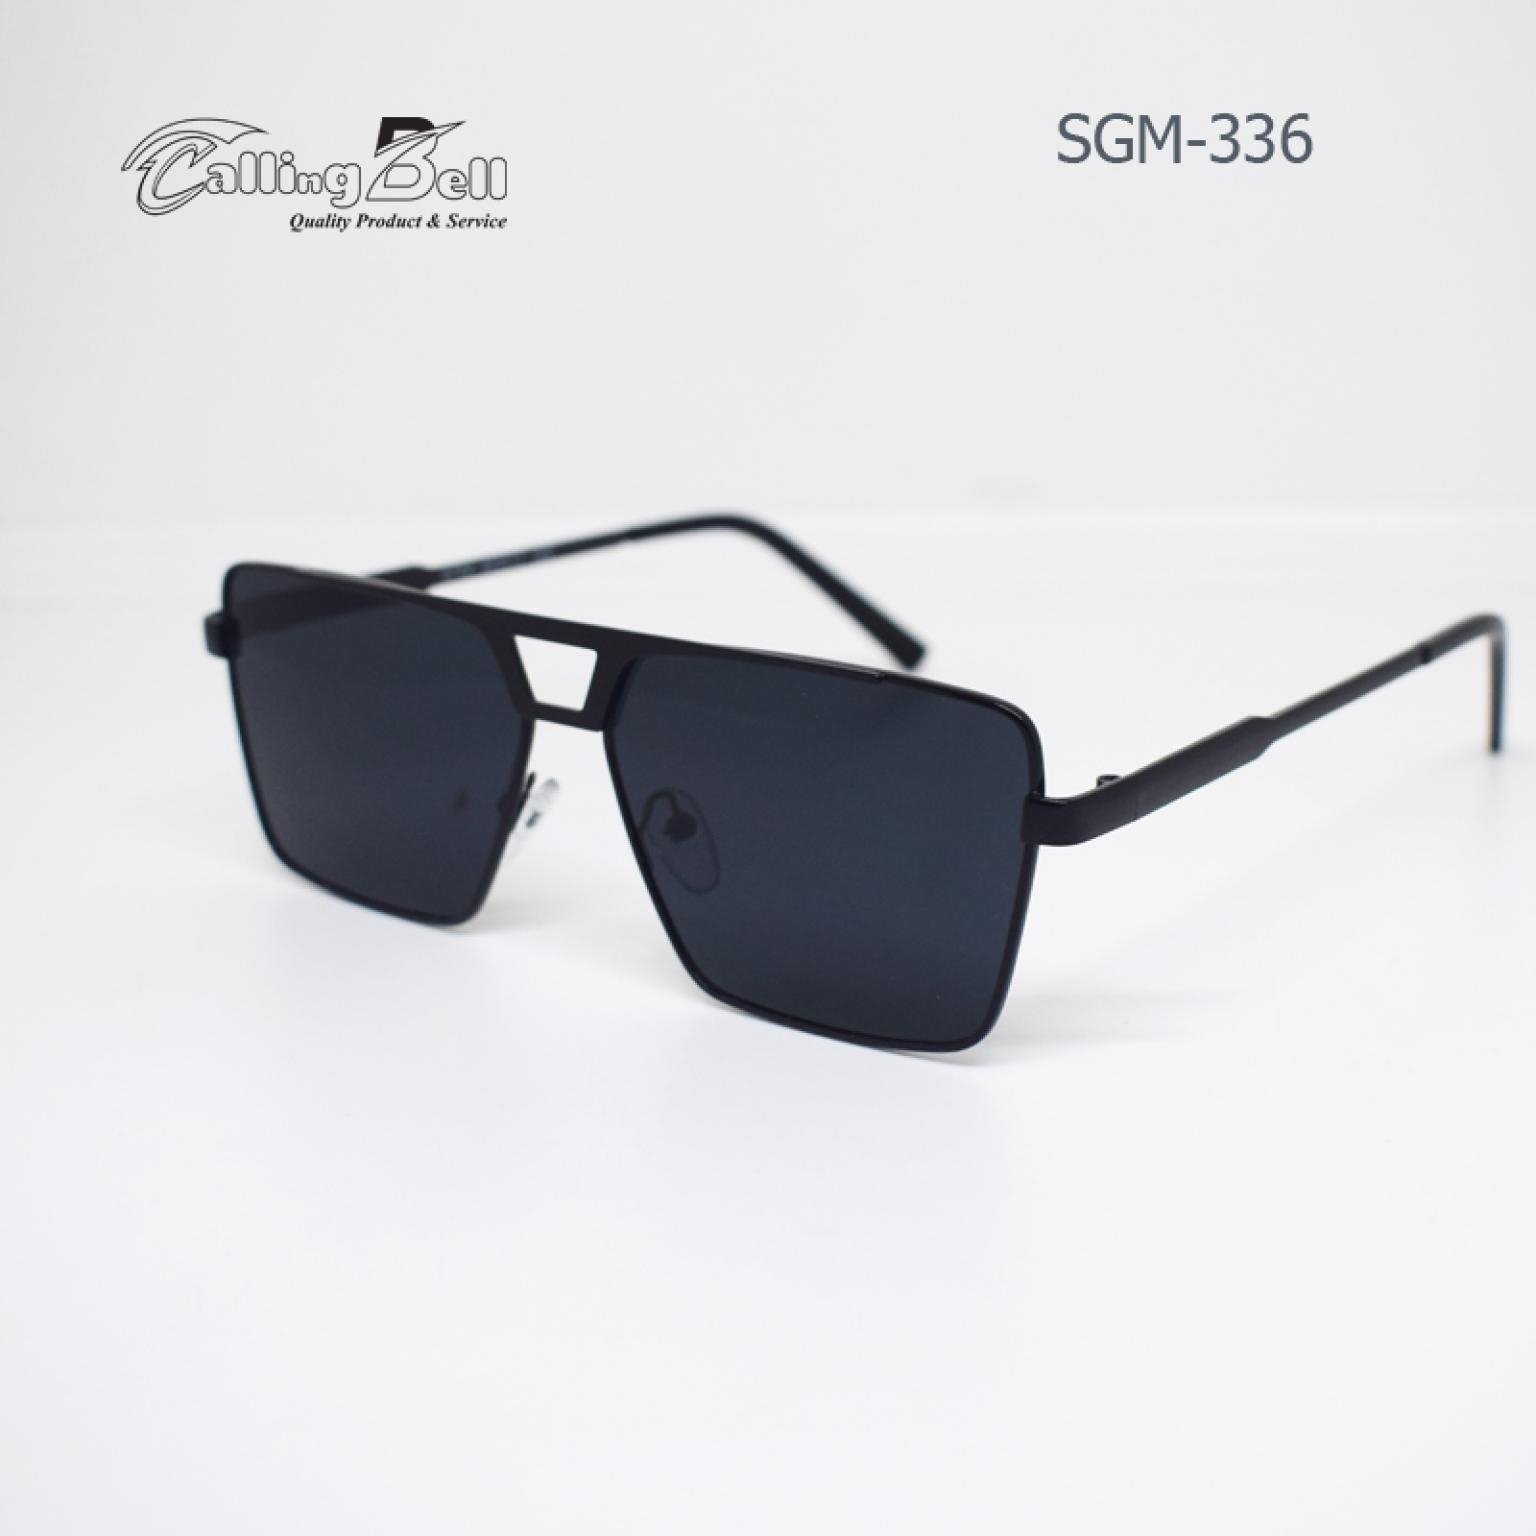 Classic Look Trendy Fashion Sunglasses For Stylish Men Women Driving Sun Glass